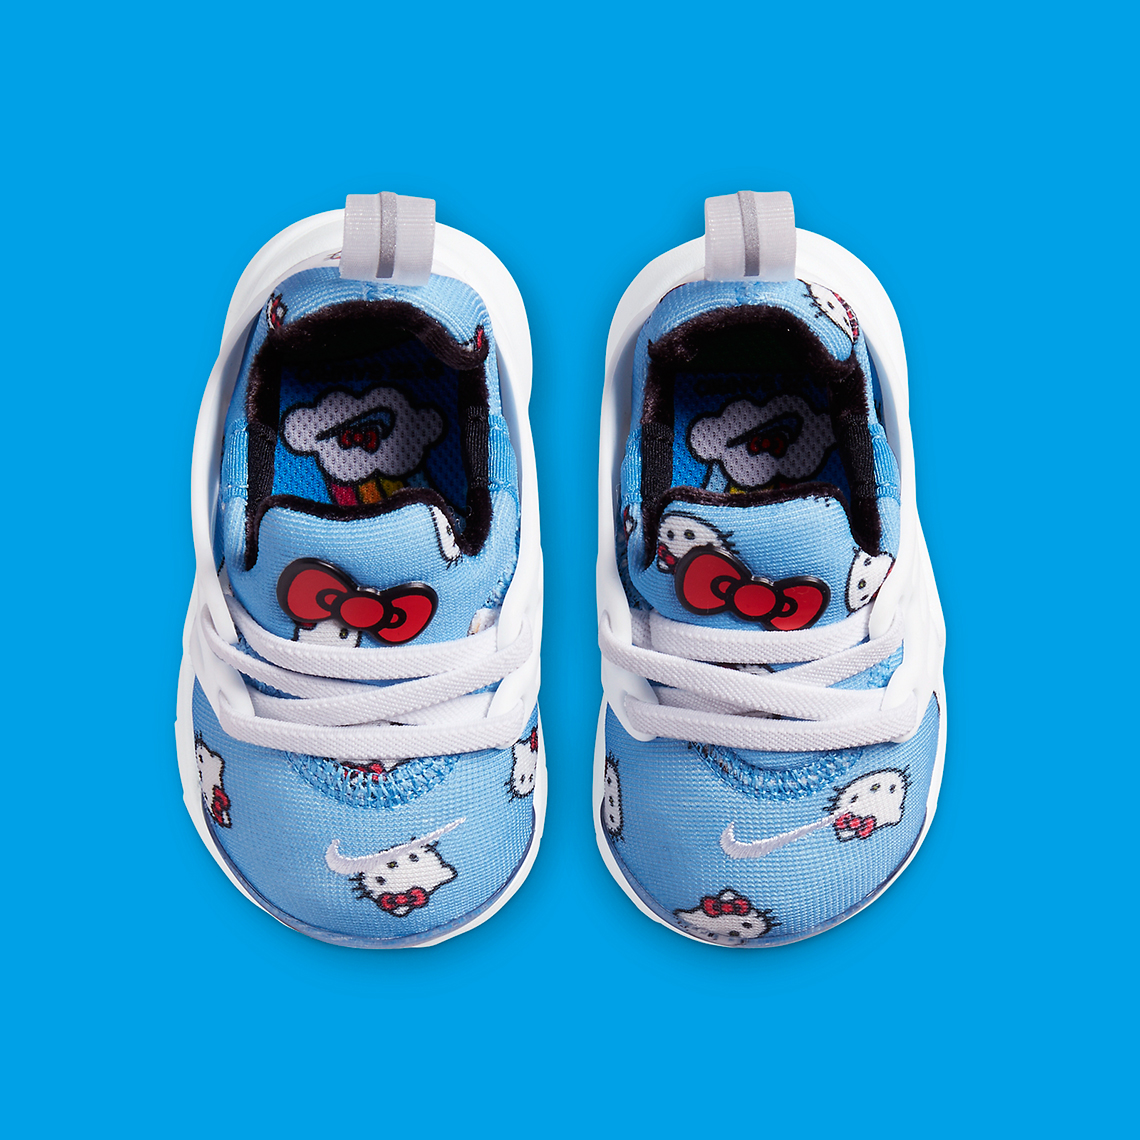 brass monkey nike shoes uk store Hello Kitty Toddler Td 9